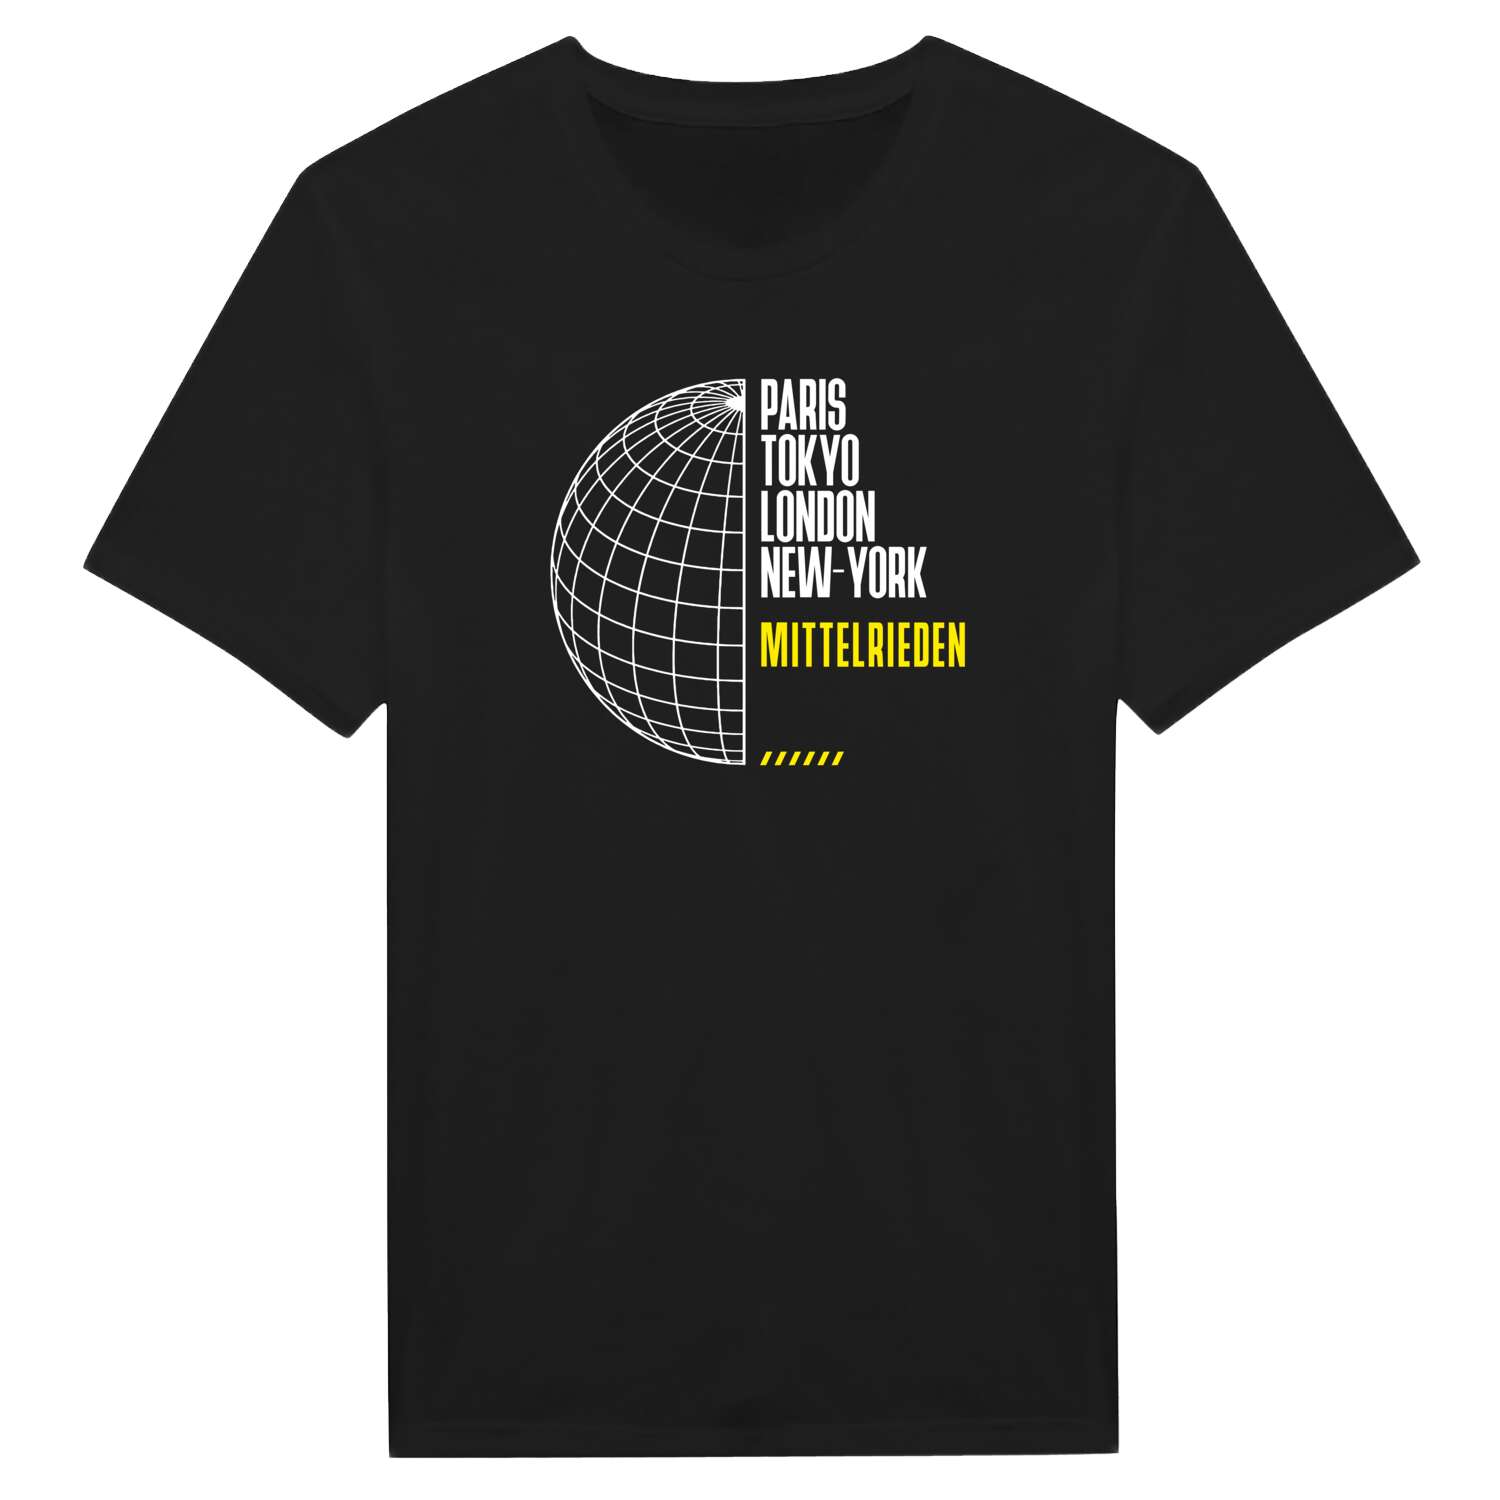 Mittelrieden T-Shirt »Paris Tokyo London«